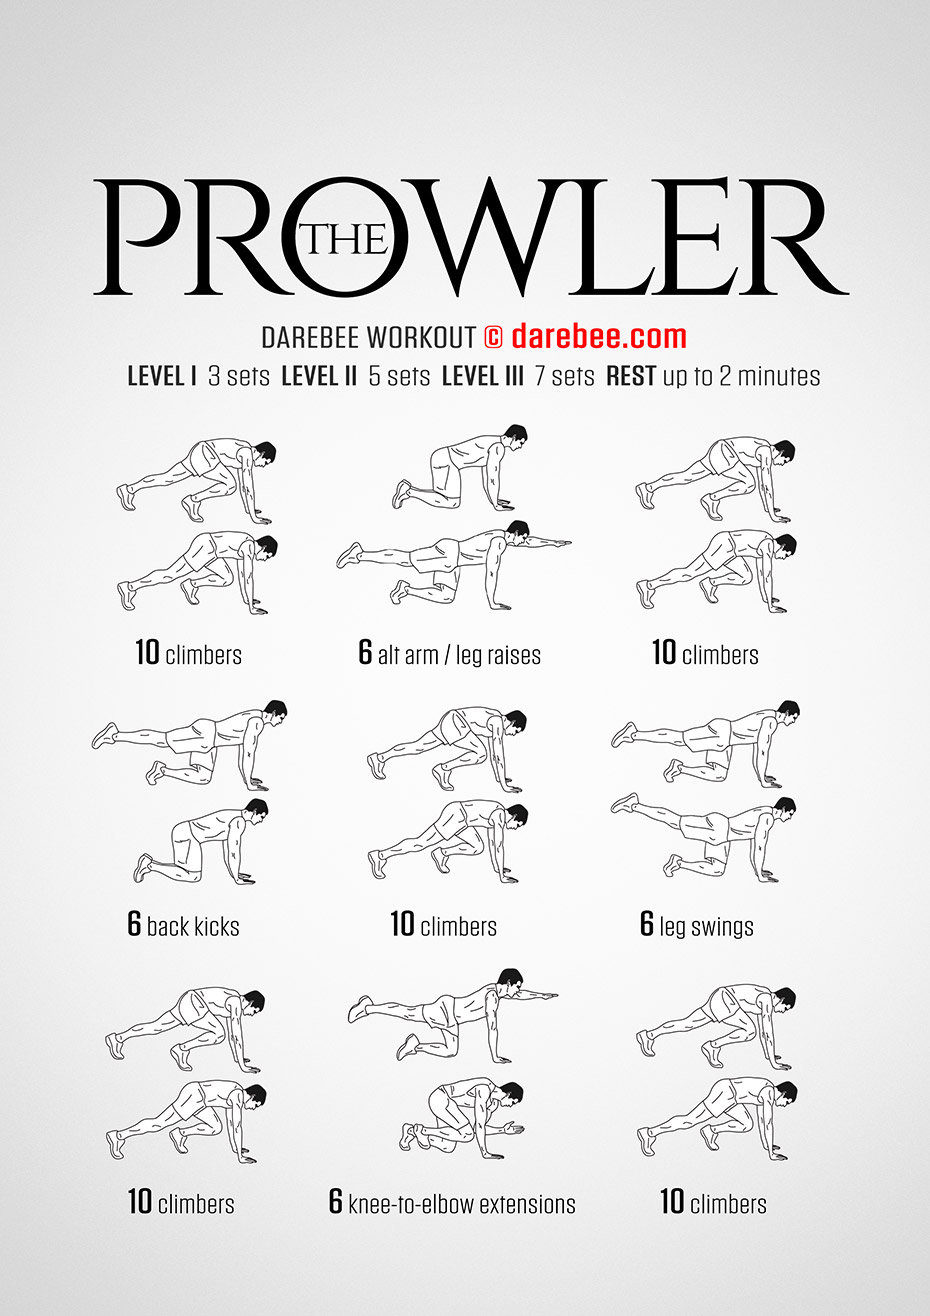 15 Minute Prowler Workout Program for Beginner